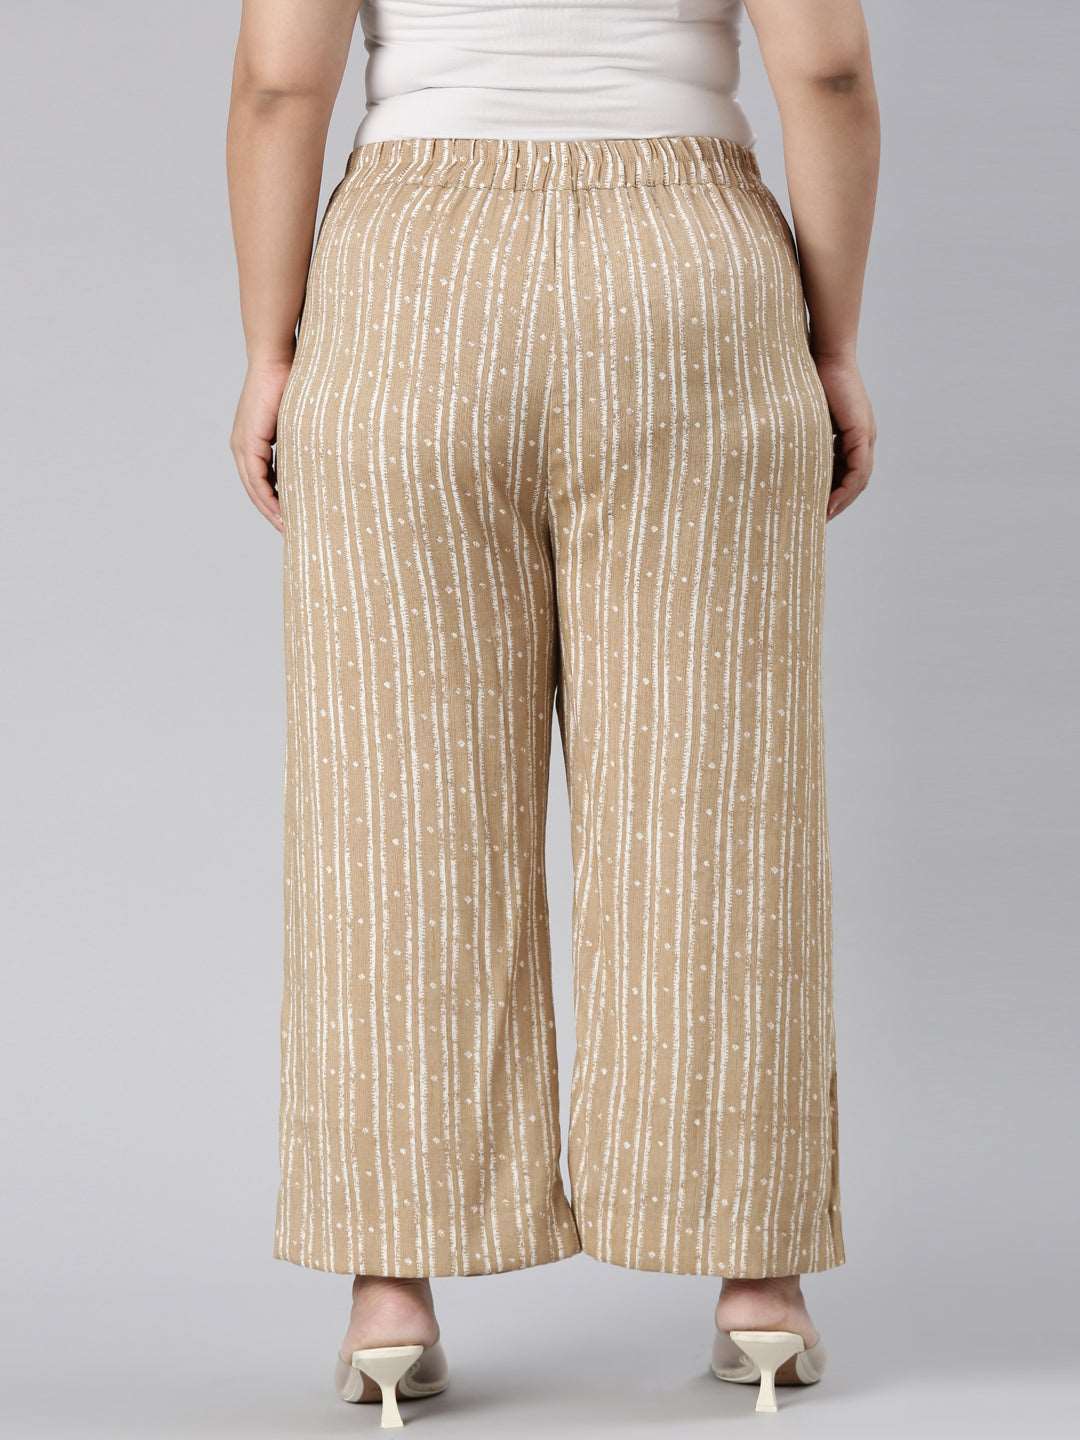 TheShaili - Women's Regular fit palazzo pant with elasticated waistband